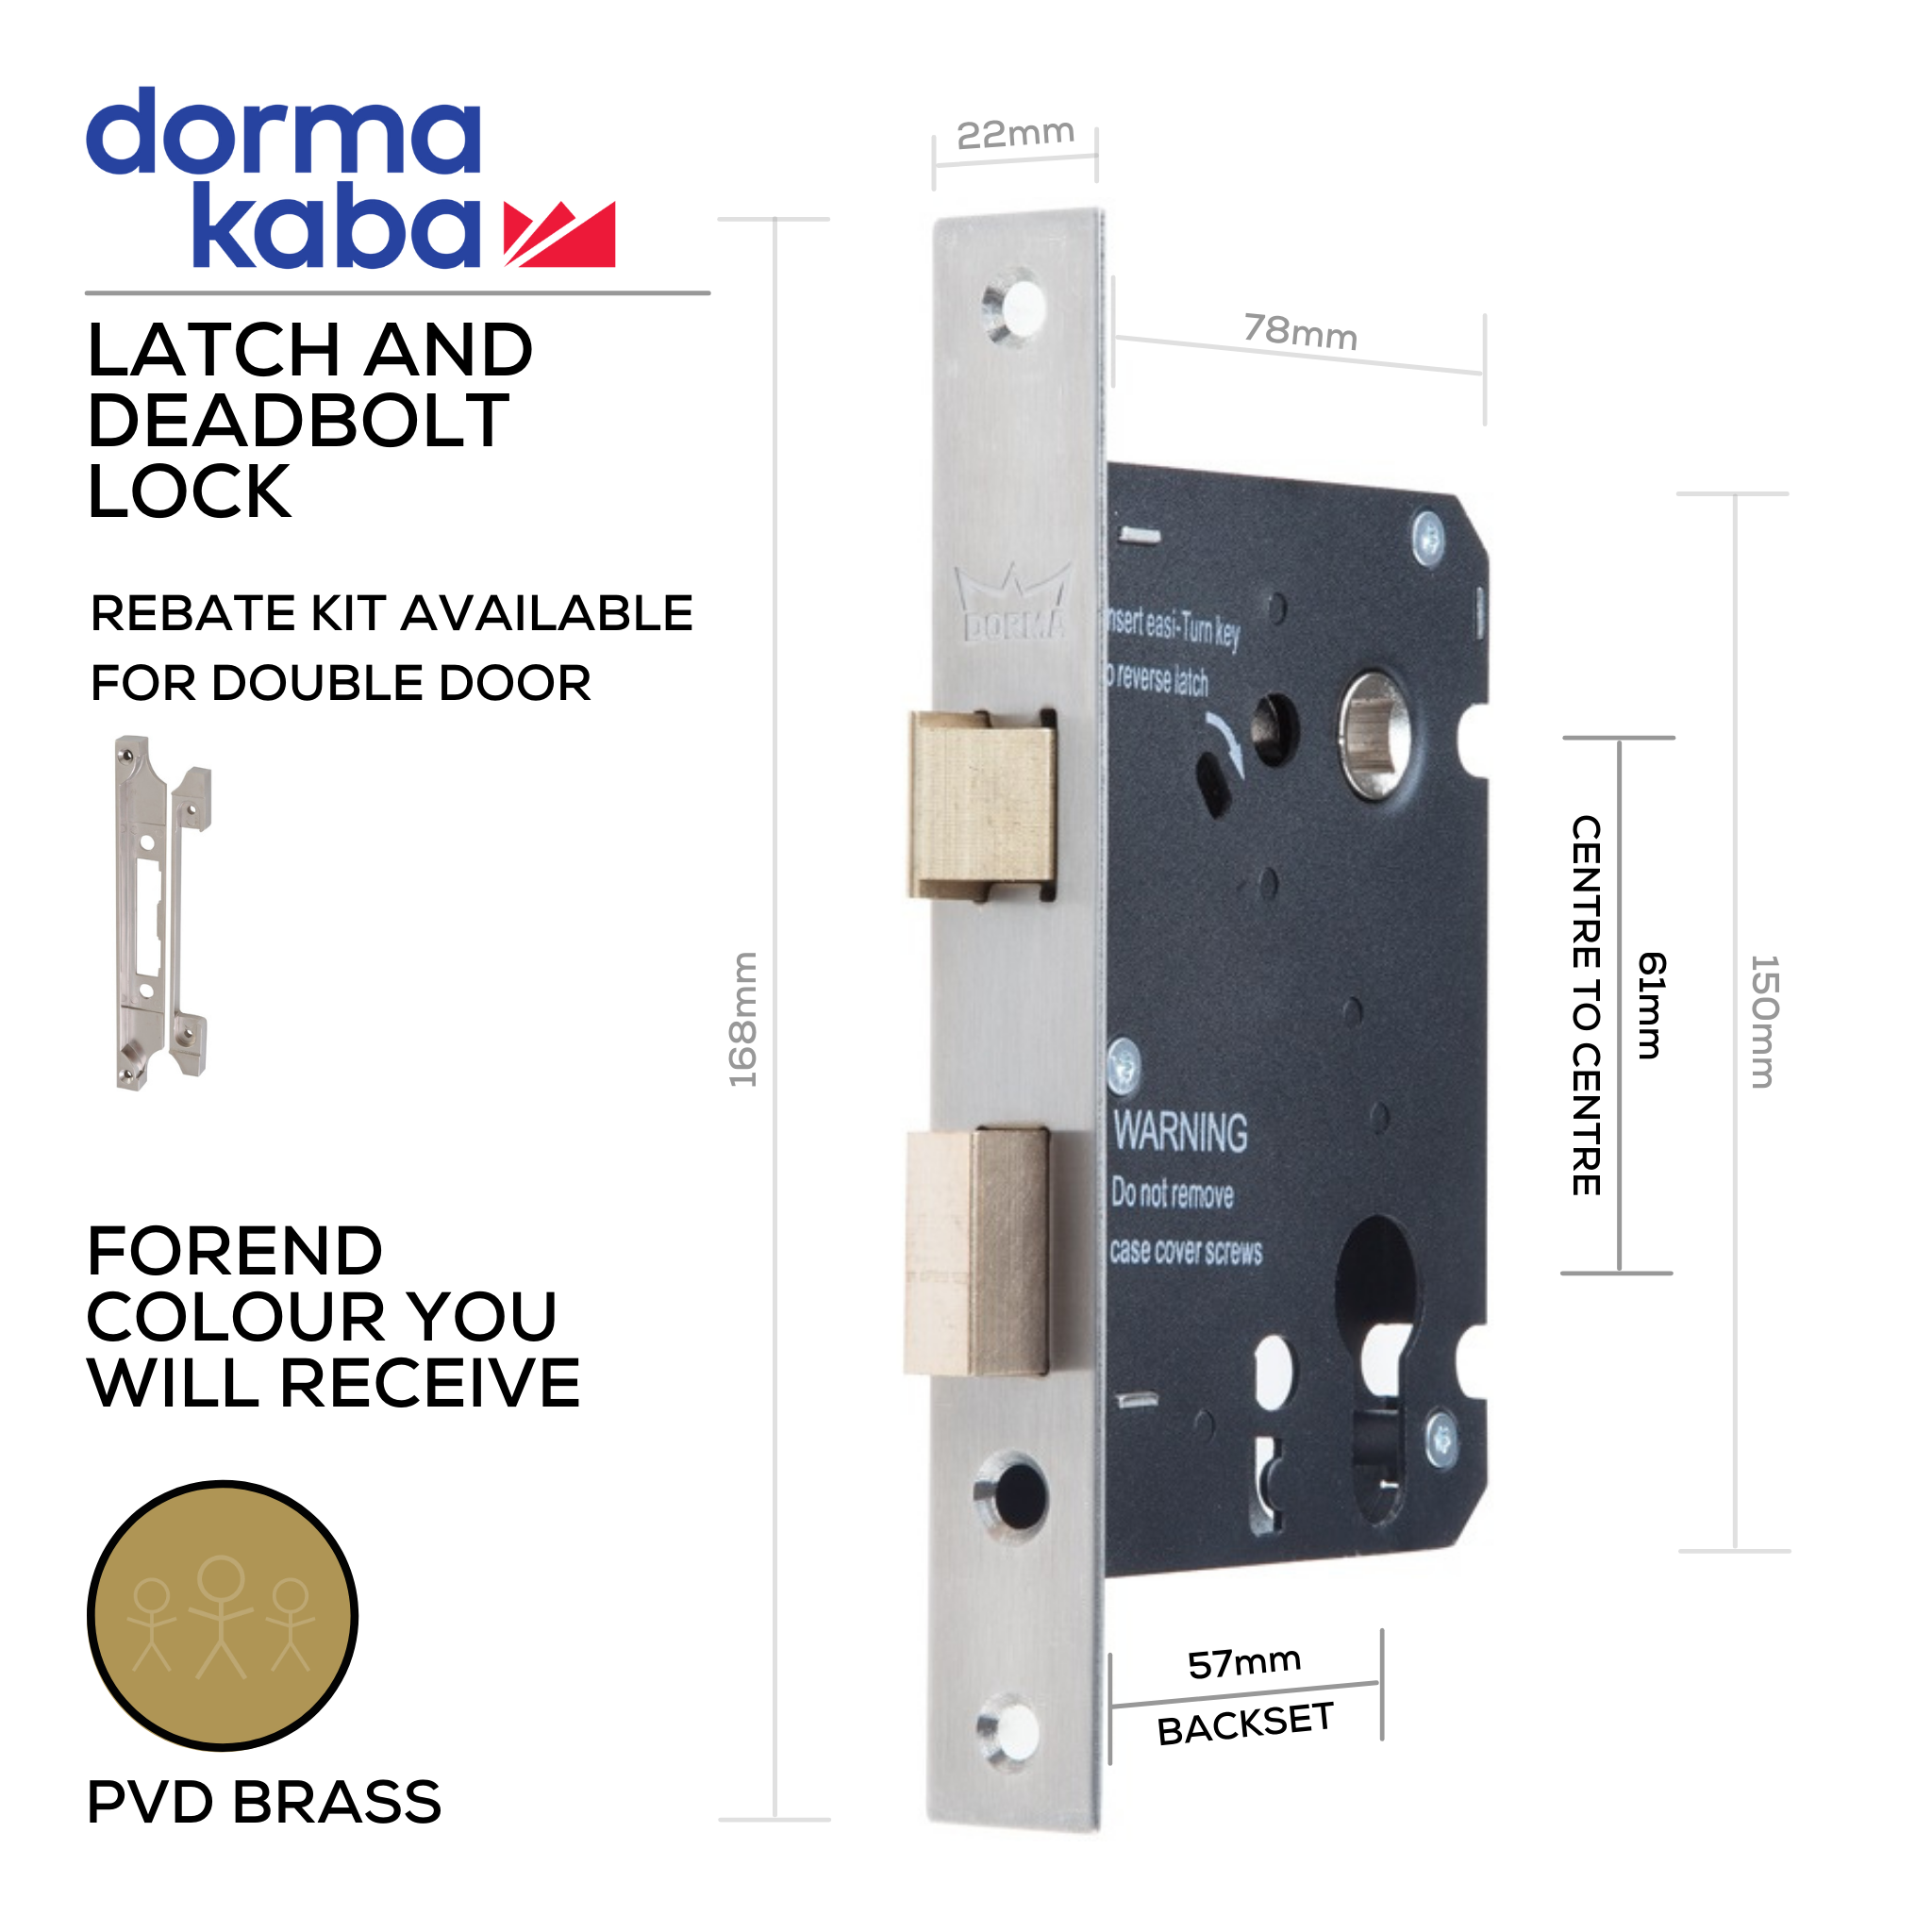 D036S PVD Brass, Latch & Deadbolt Lock, Euro Cylinder, Excluding Cylinder, 57mm (Backset) x 61mm (ctc), PVD Brass, DORMAKABA